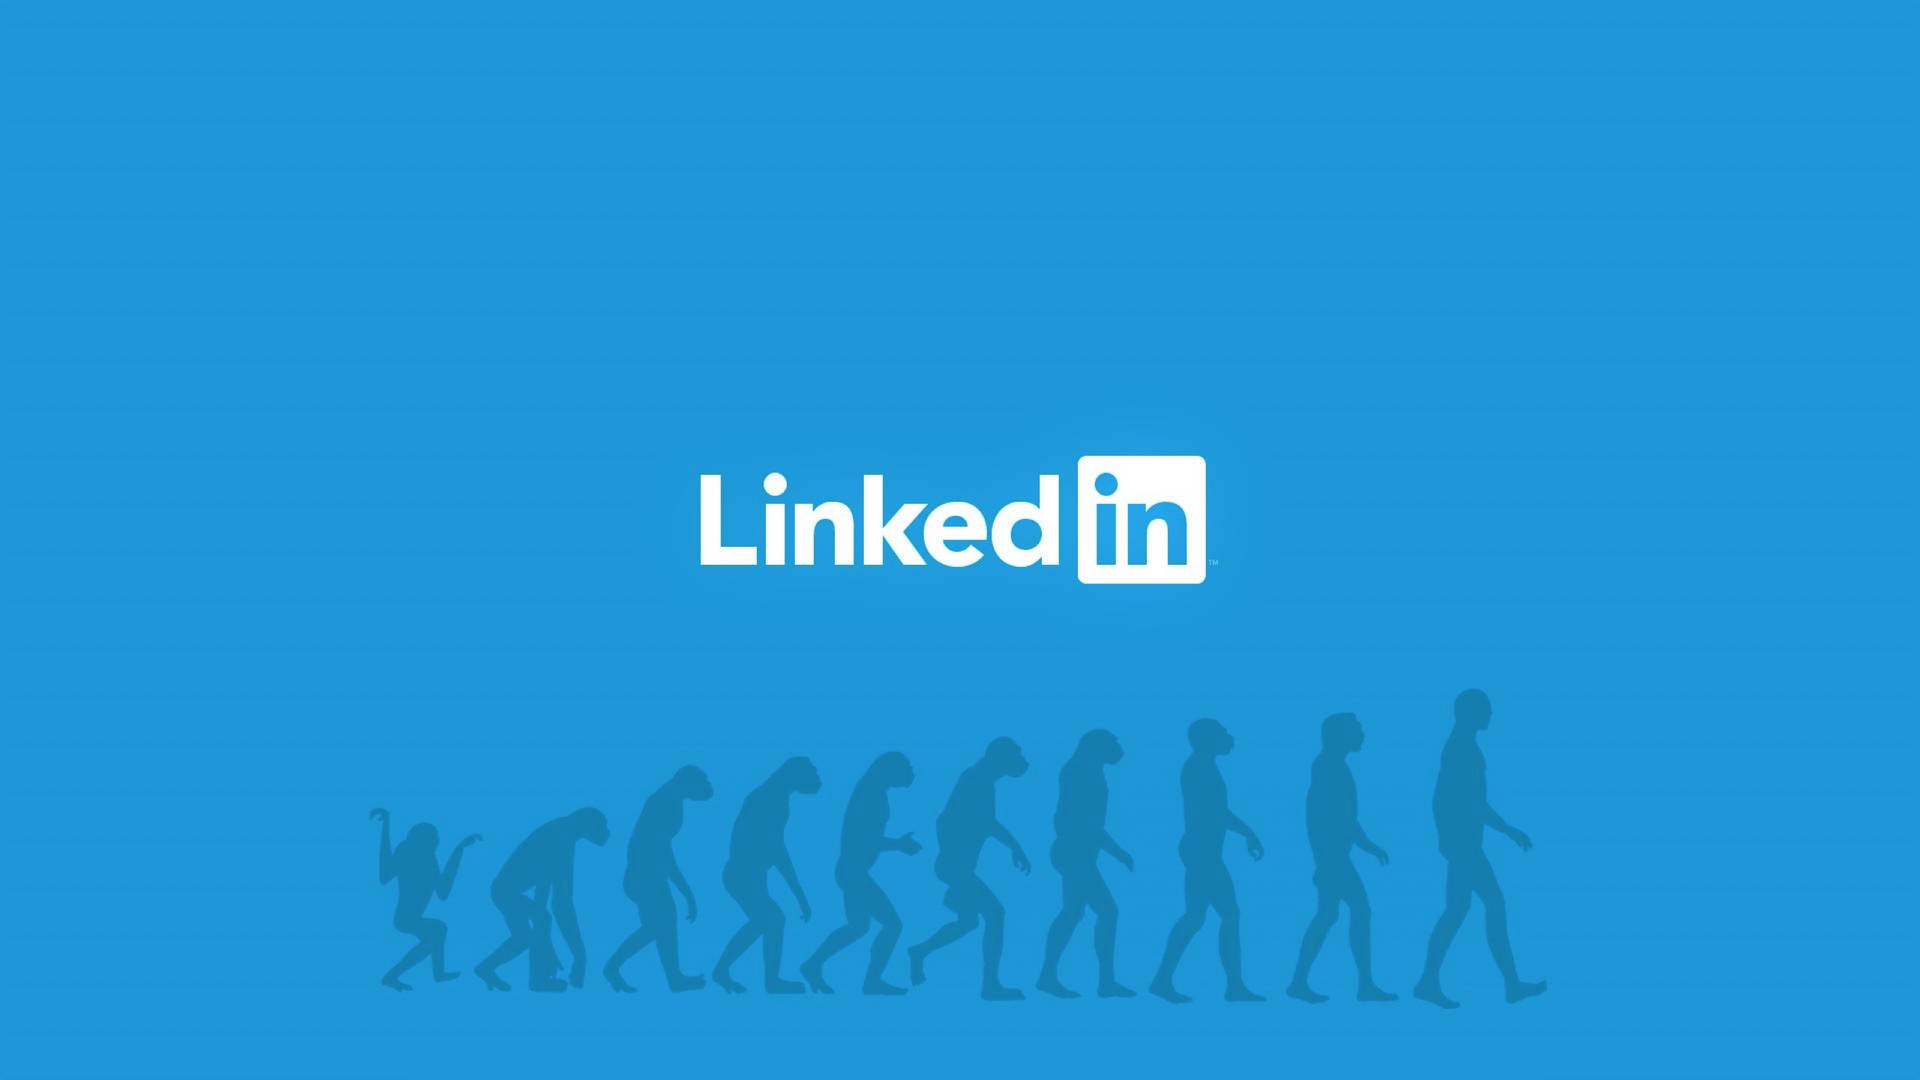 LinkedIn Evolution Of Man Wallpaper